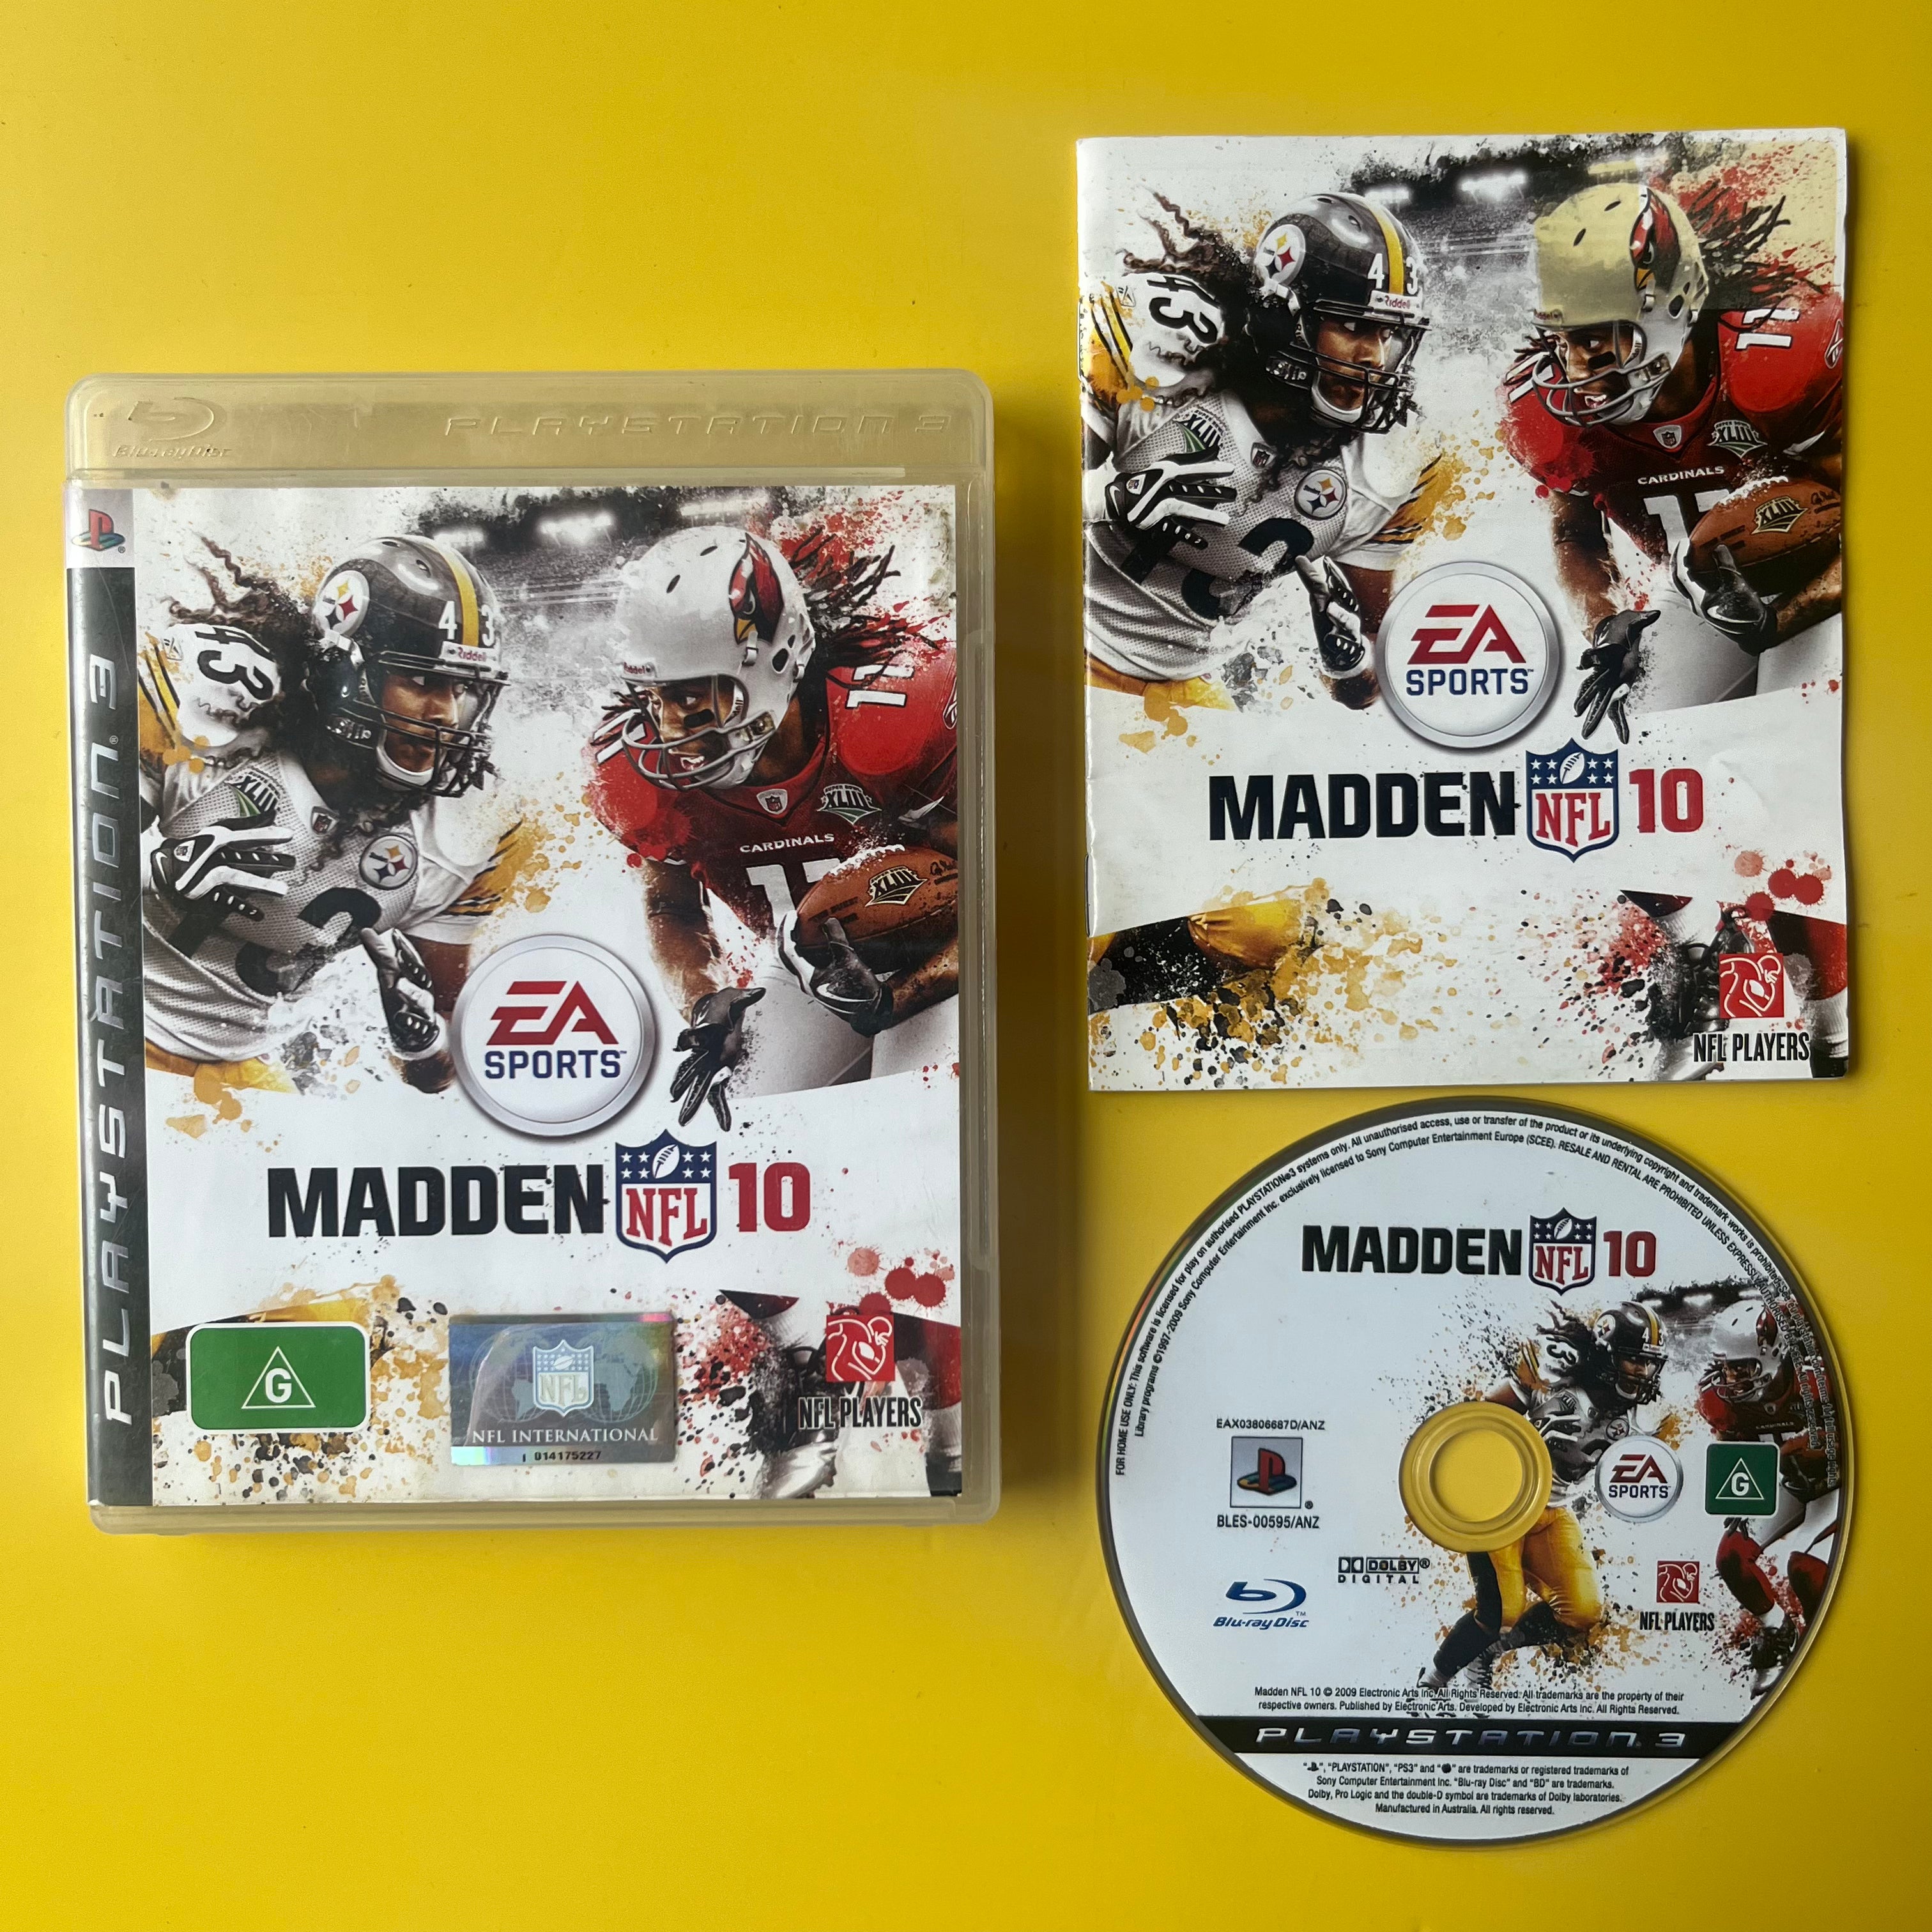 PS3 - Madden NFL 10